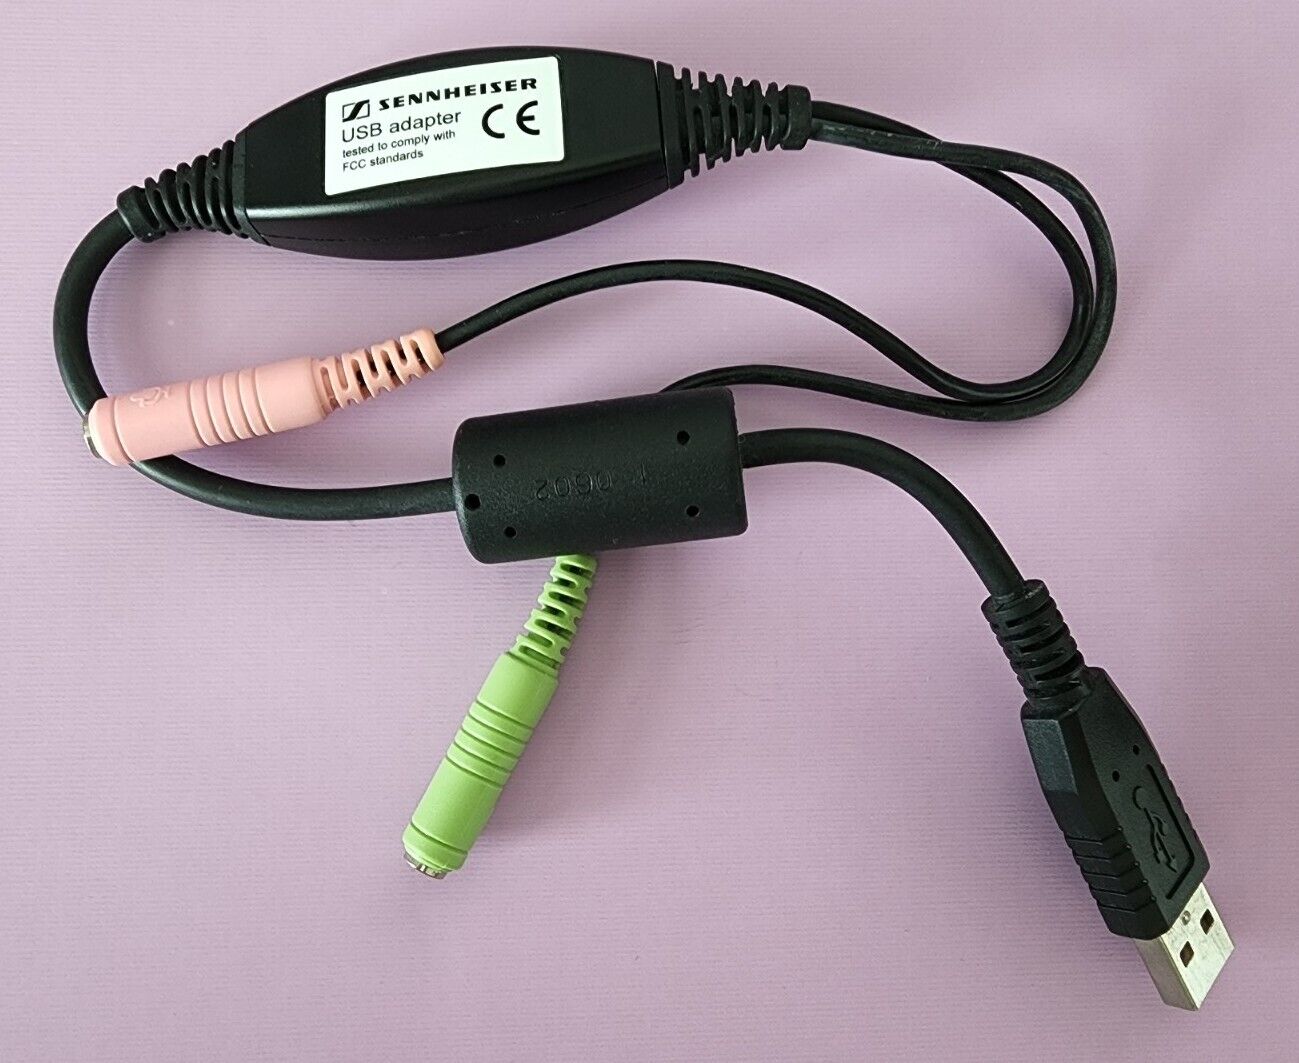 SENNHEISER UUSB1 USB Adapter - Model 5374